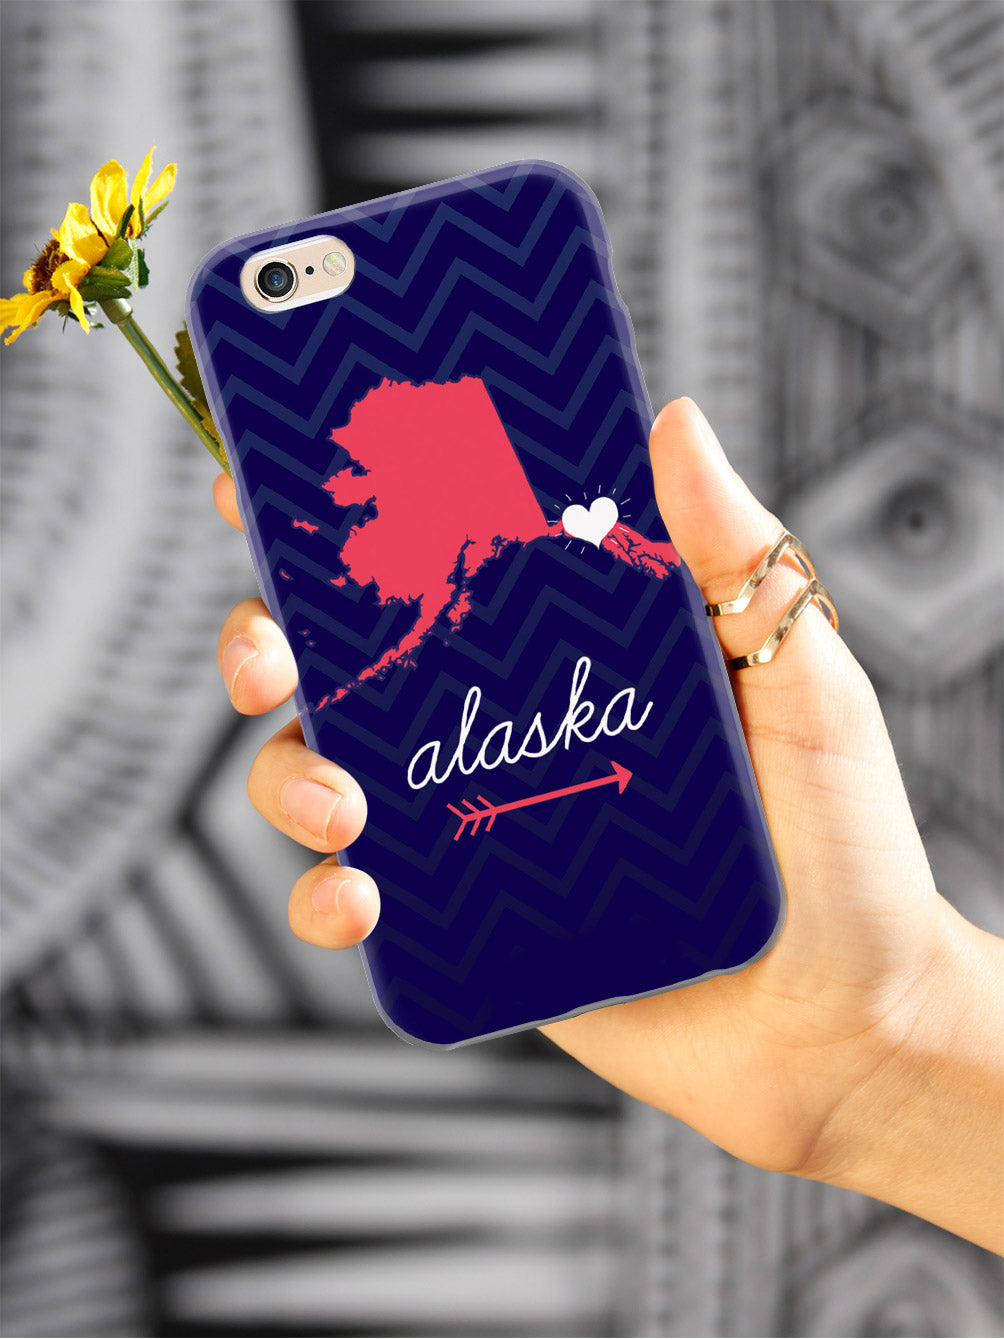 Alaska Chevron Pattern State Case